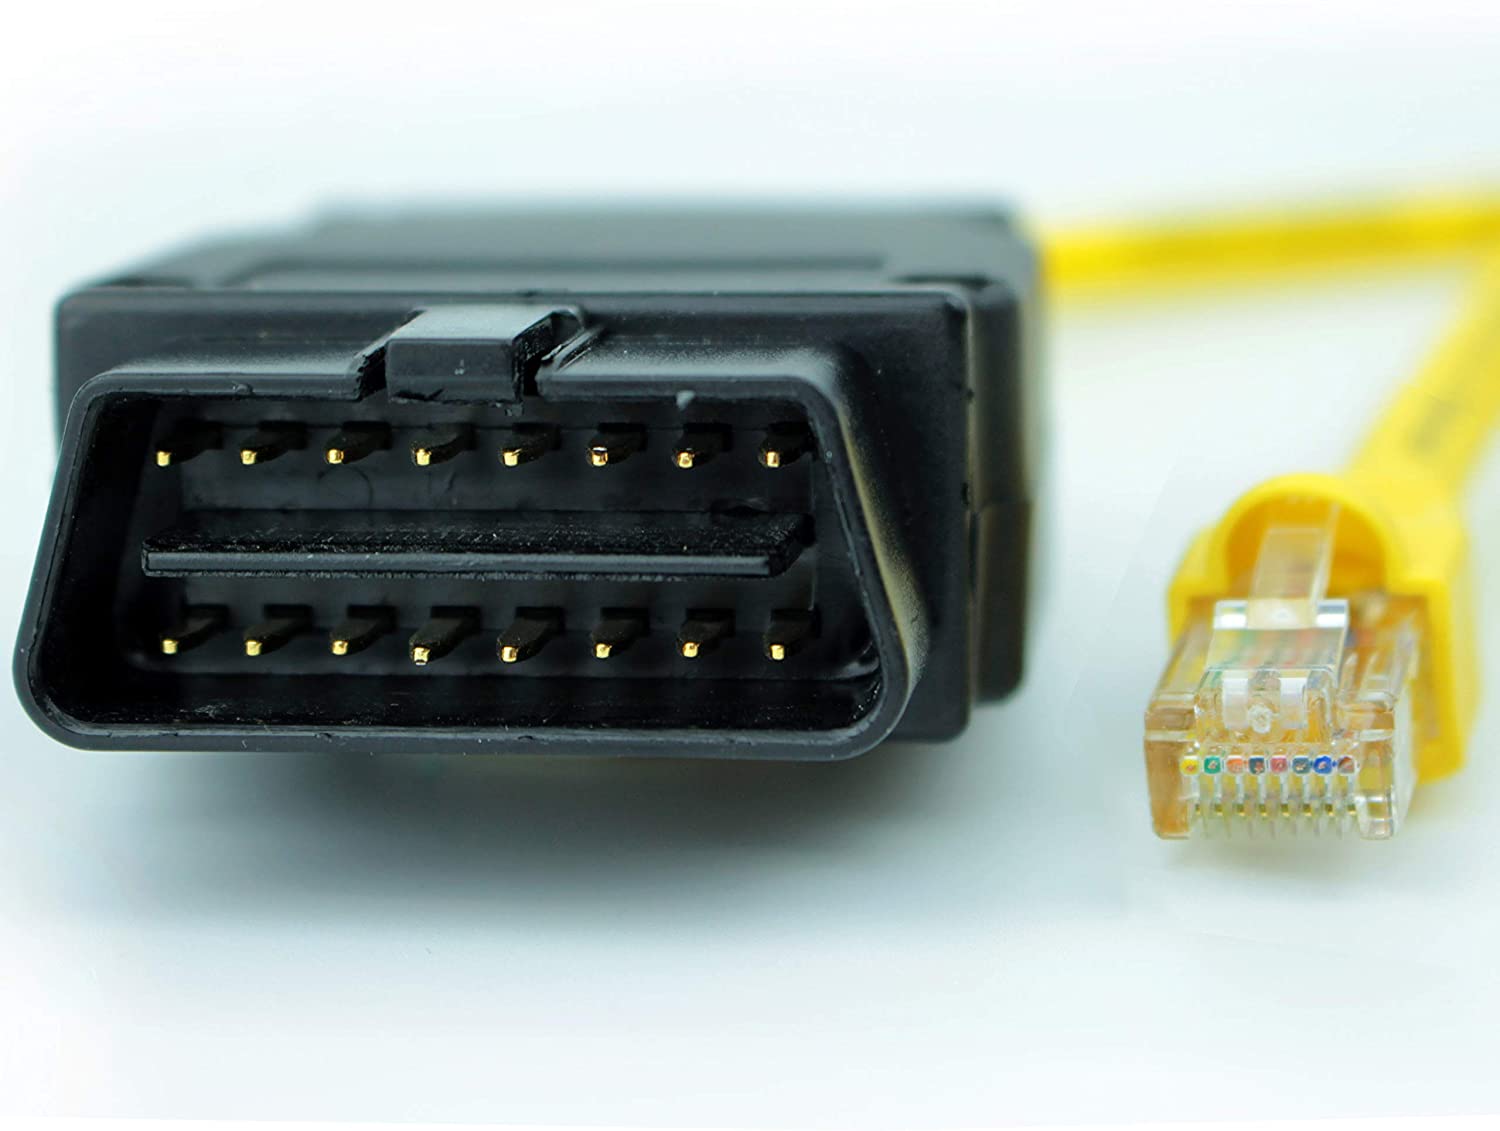 ENET OBD Interface Cable for BMW E-SYS ICOM Coding Diagnostics